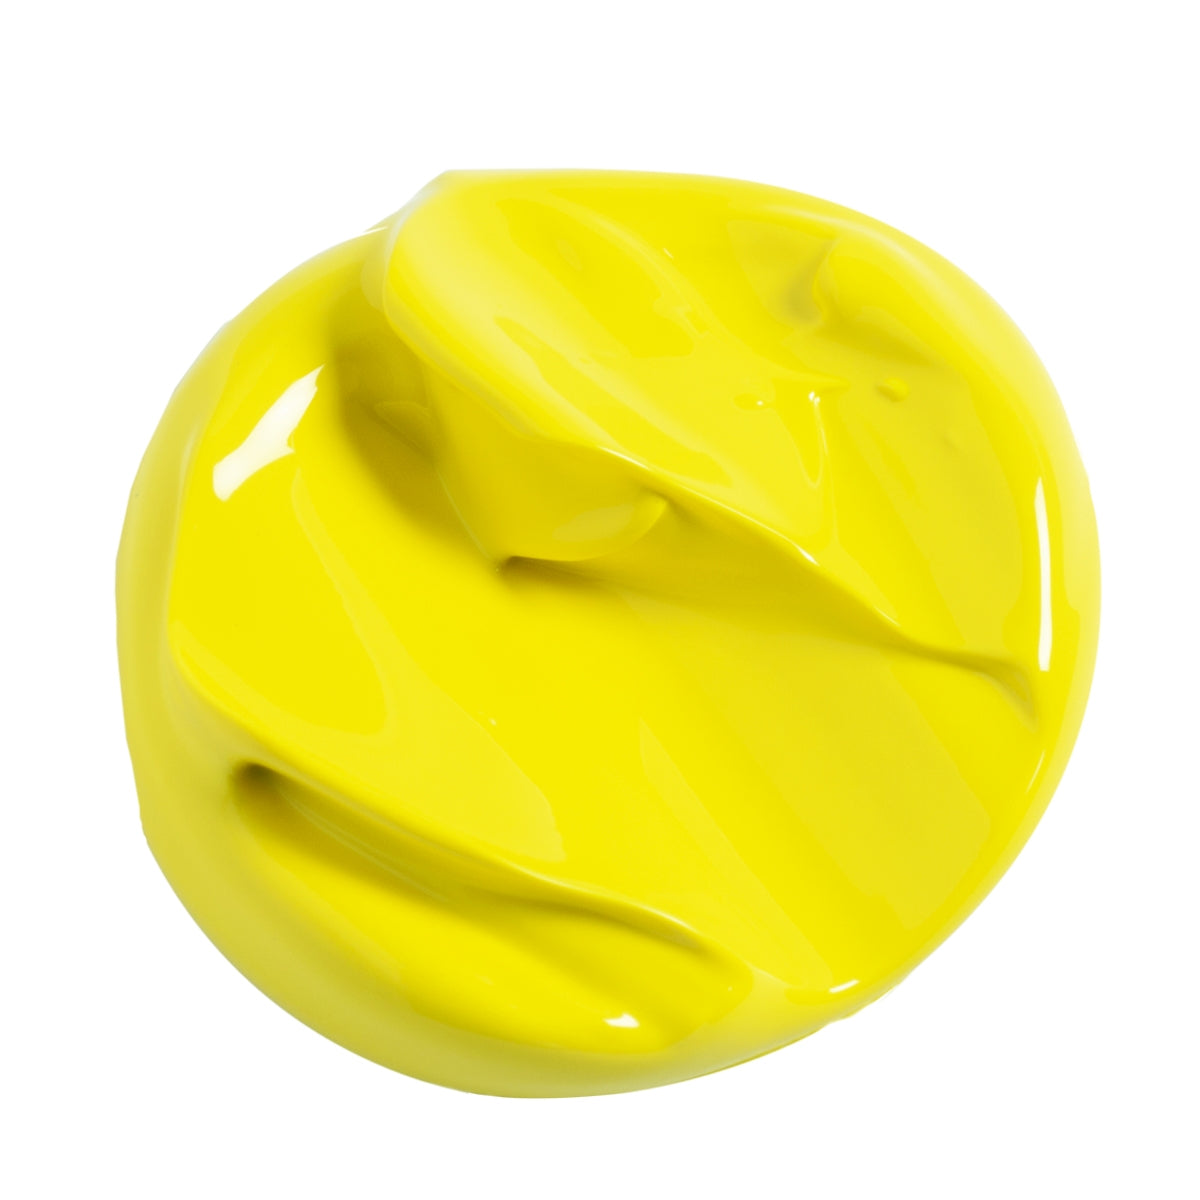 Elementen 500 ml acryl citroen geel